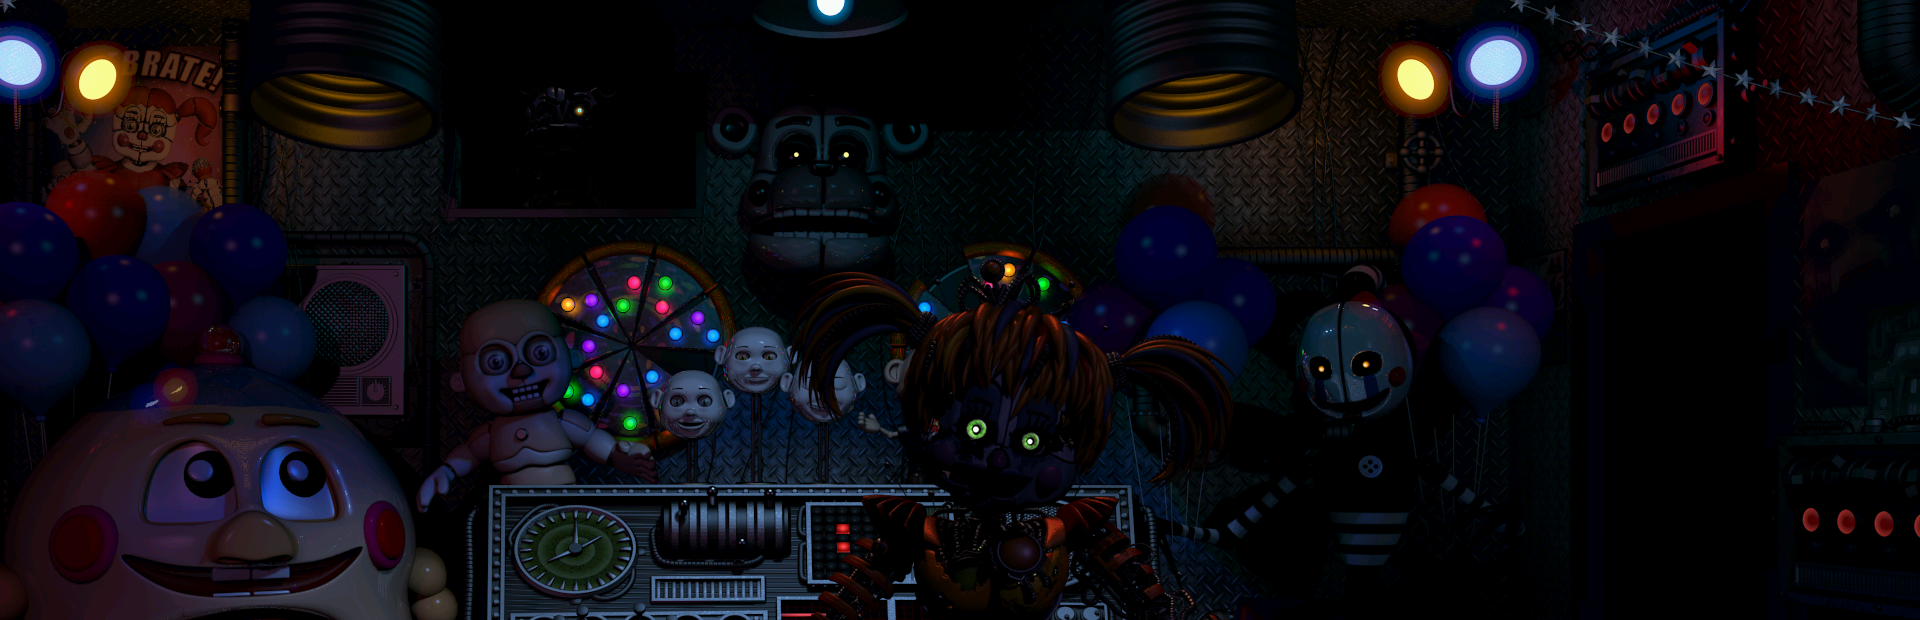 Five Nights at Freddy's 4 - Steam Custom Banner by GhaziTwaissi on  DeviantArt